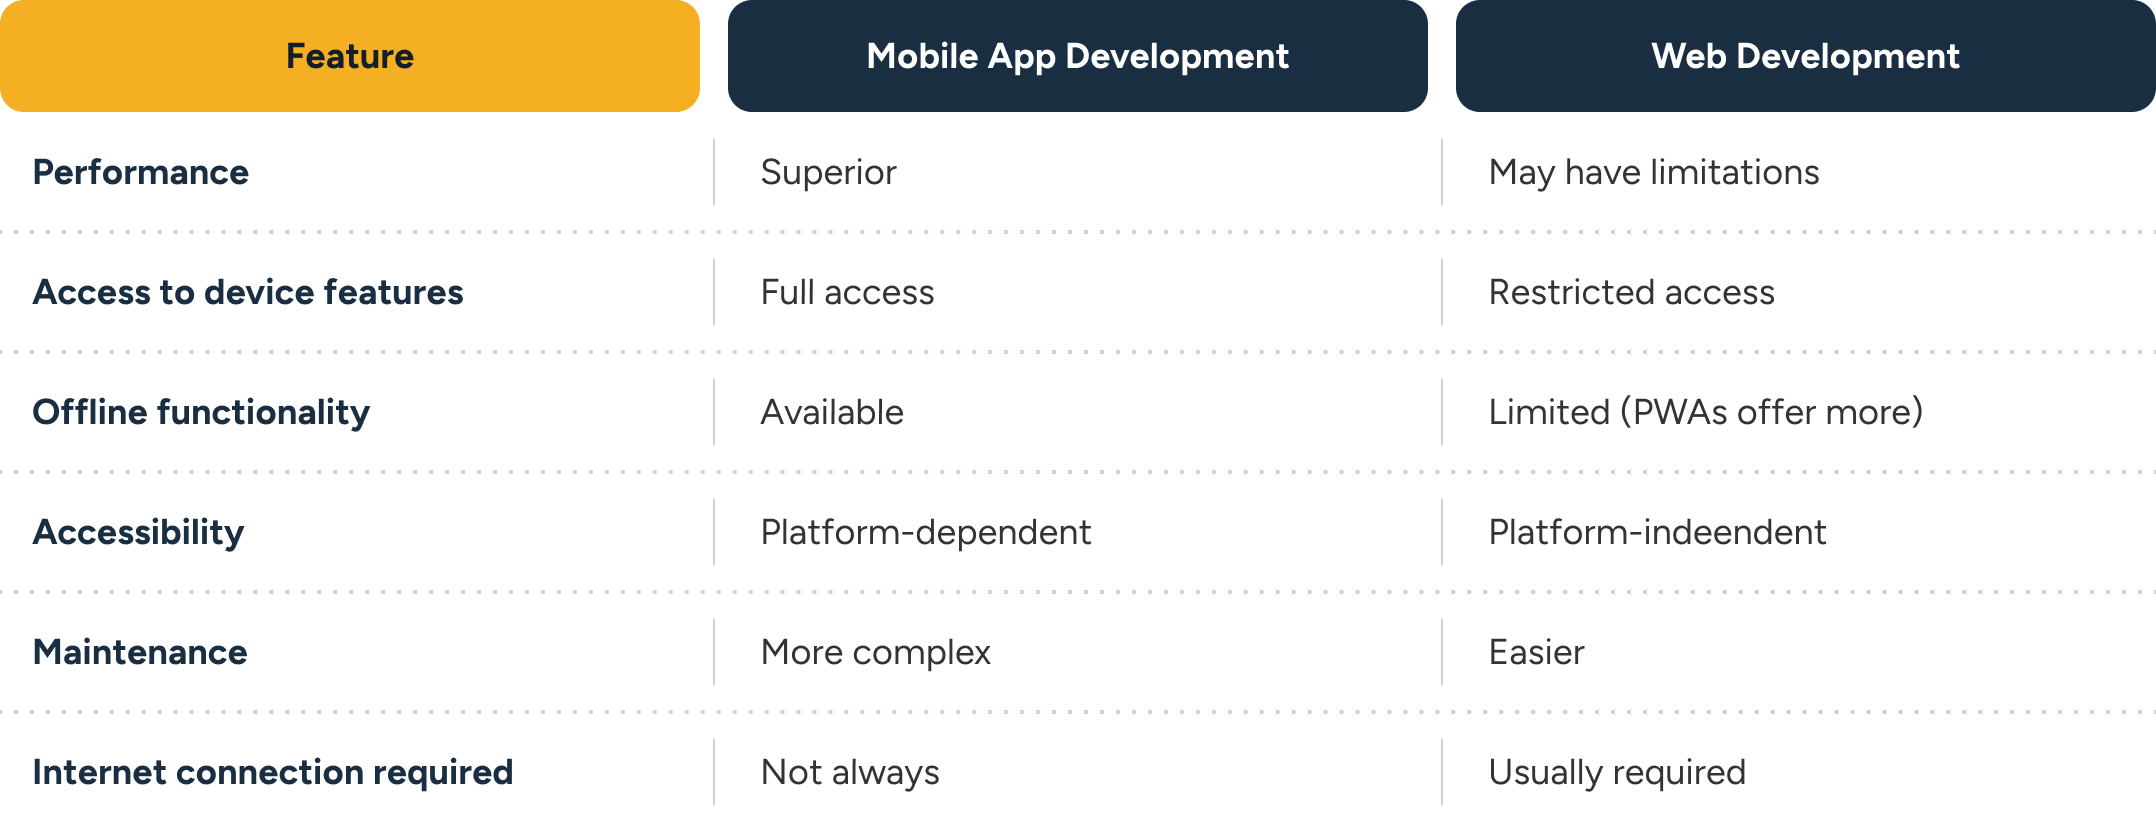 functionality-of-mobile-app-development-and-web-development-comparison